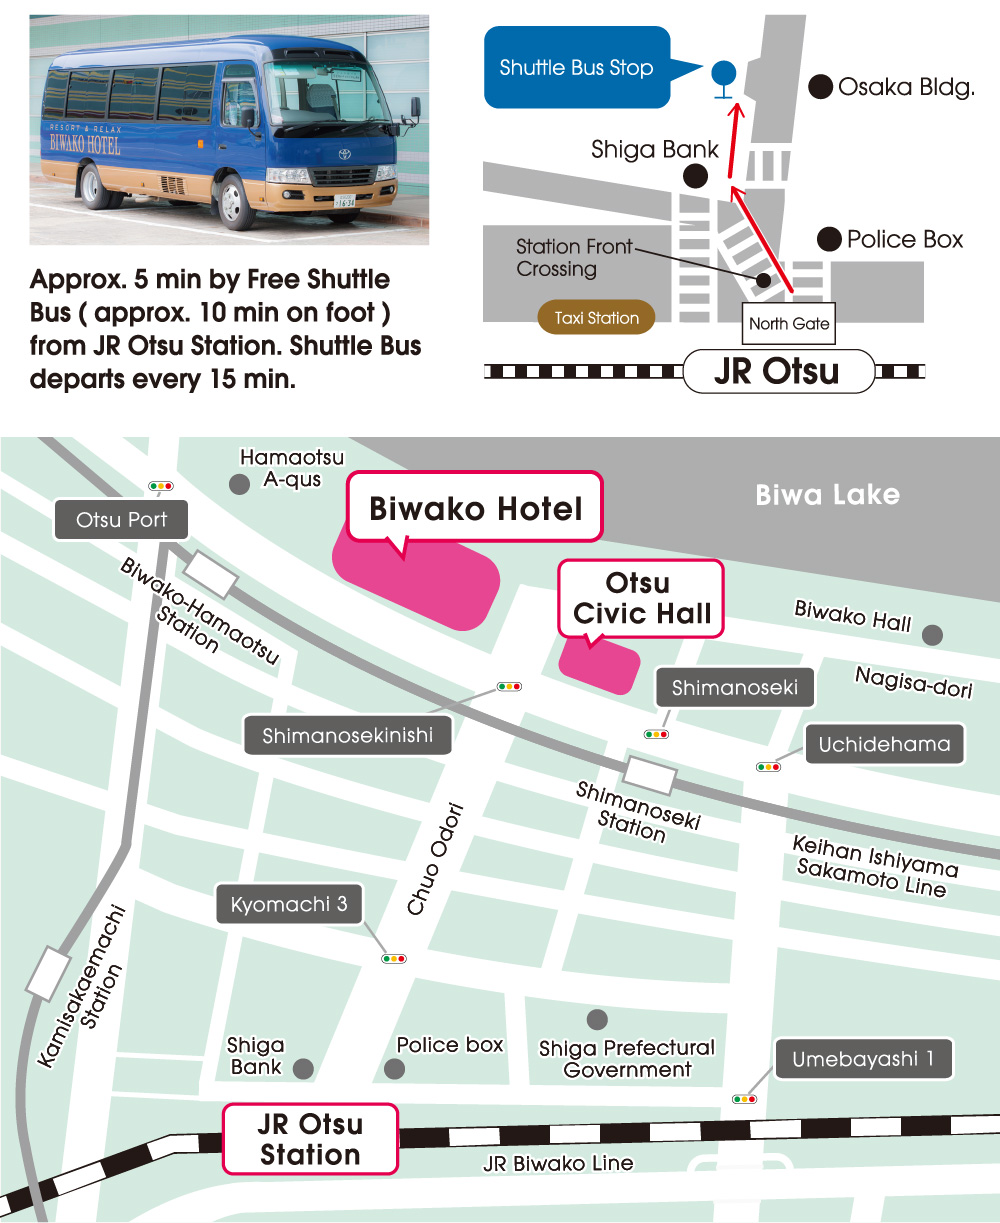 Access to  Biwako Hotel and Otsu Civic Hall from Otsu Station